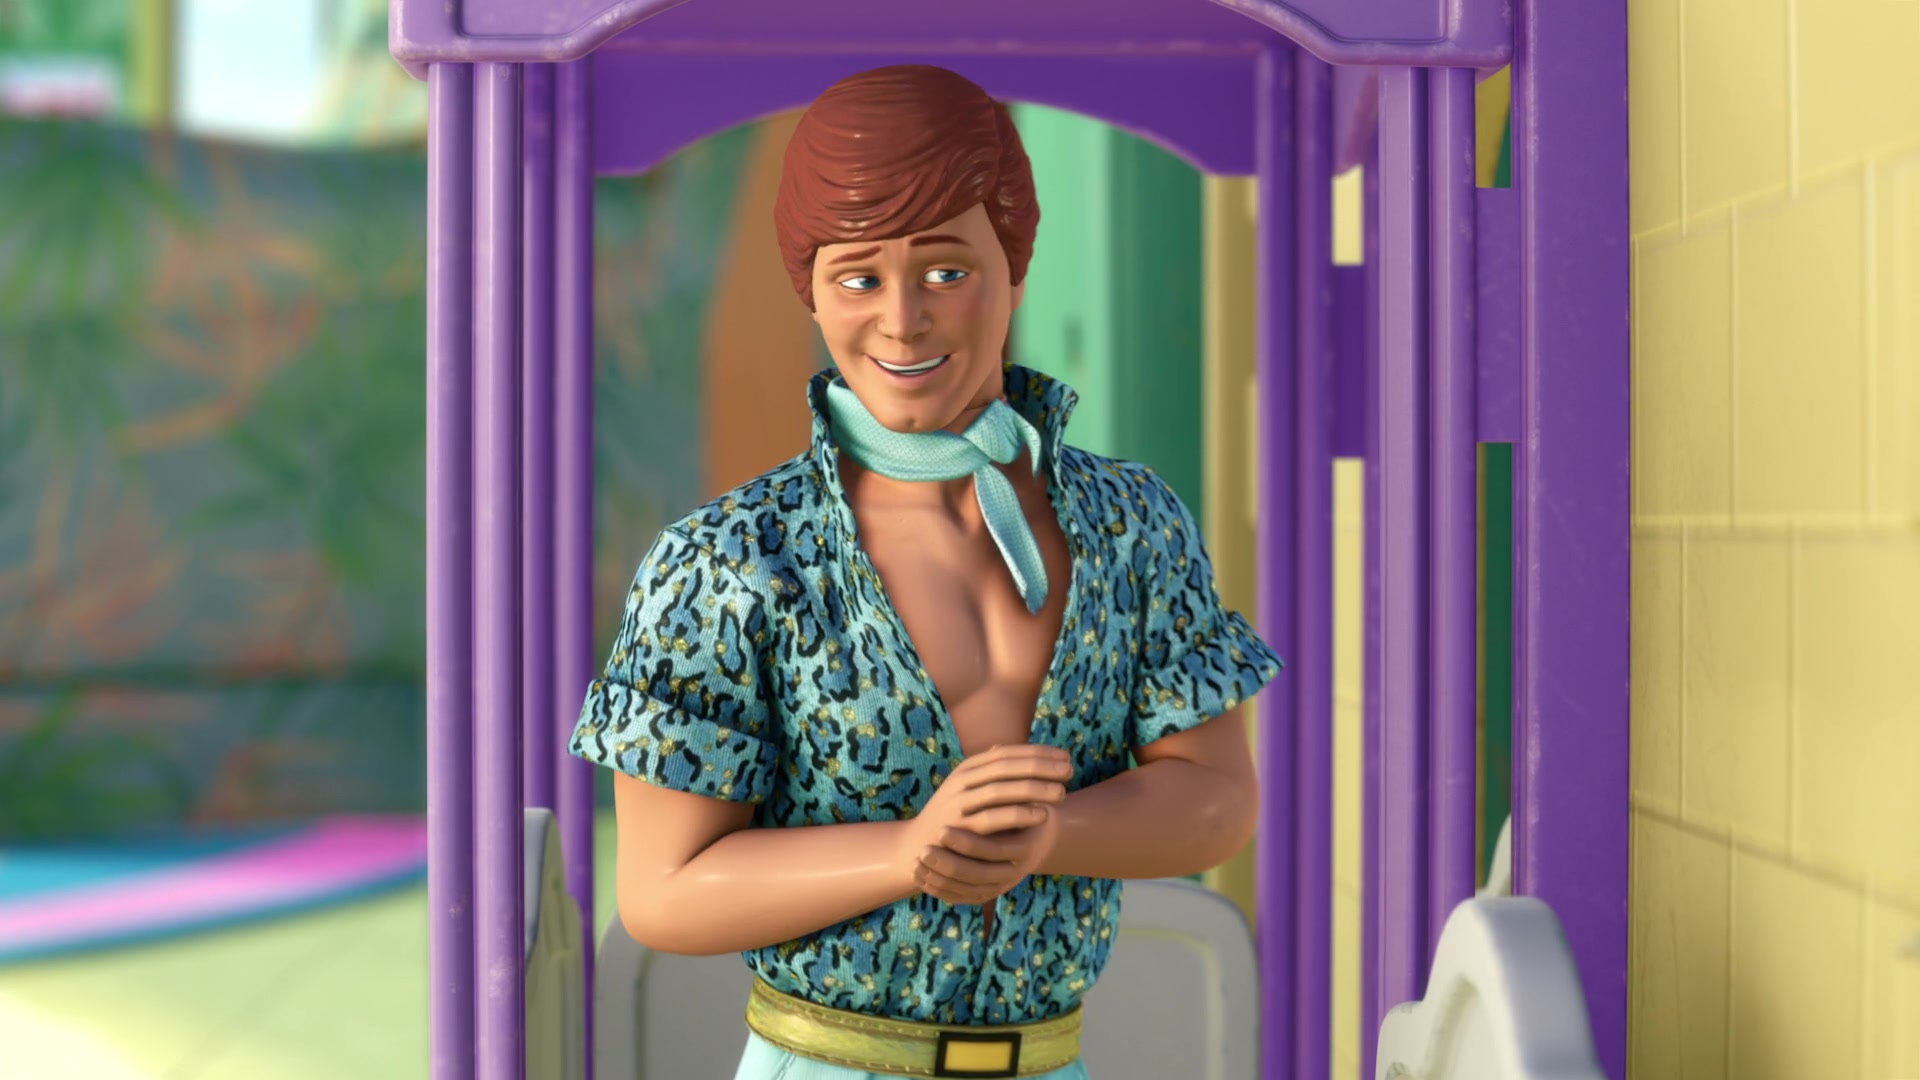 Ken Doll In Toy Story 3 (2010) .